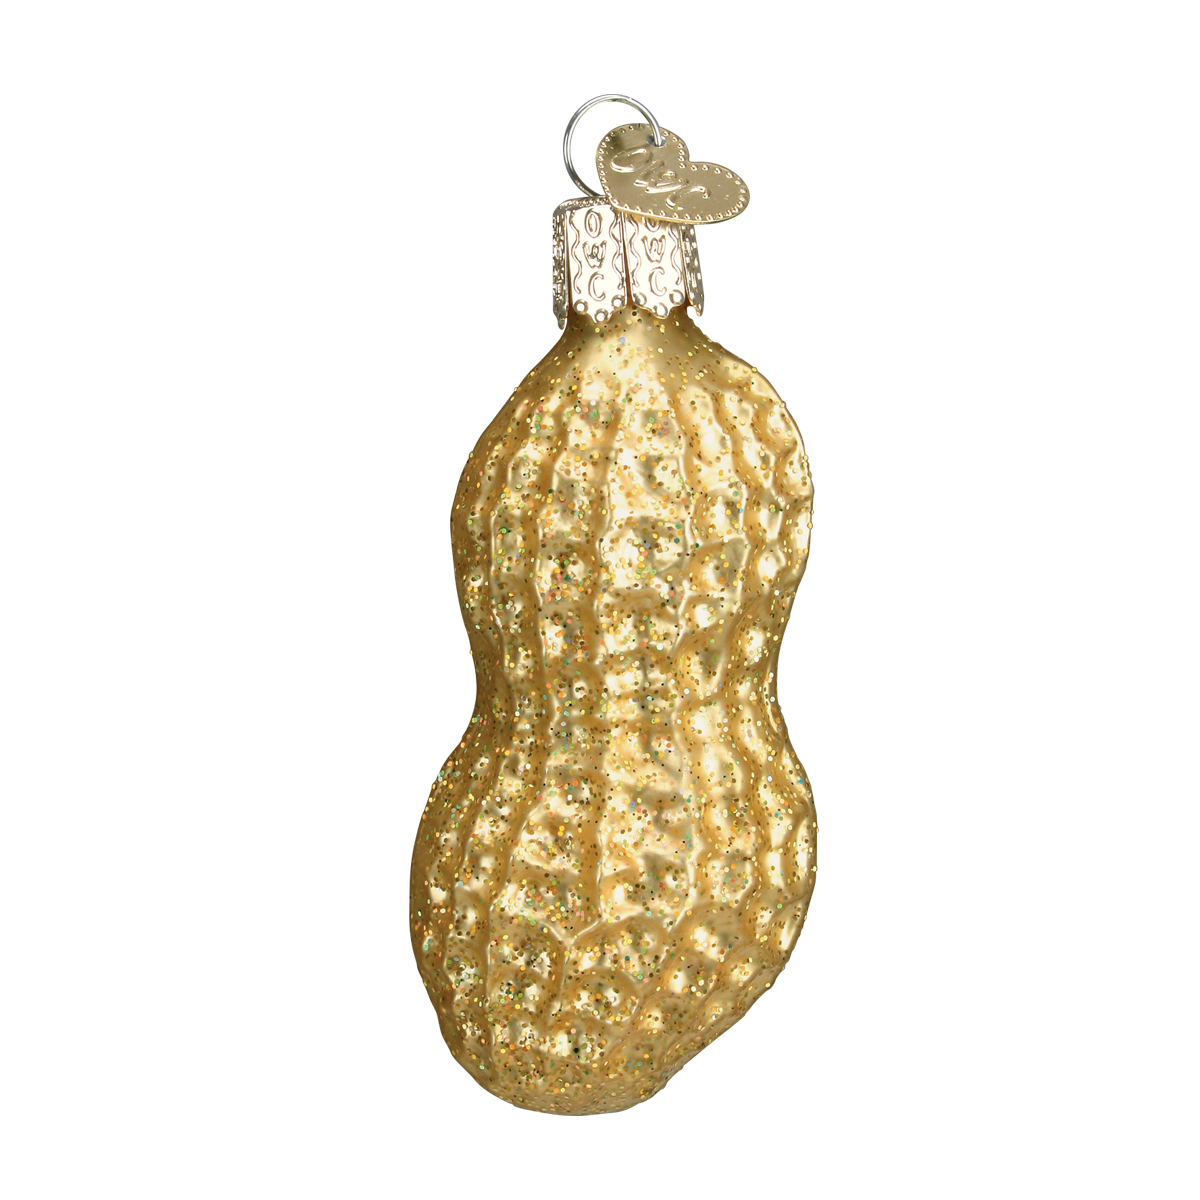 Old World Christmas Peanut Ornament    